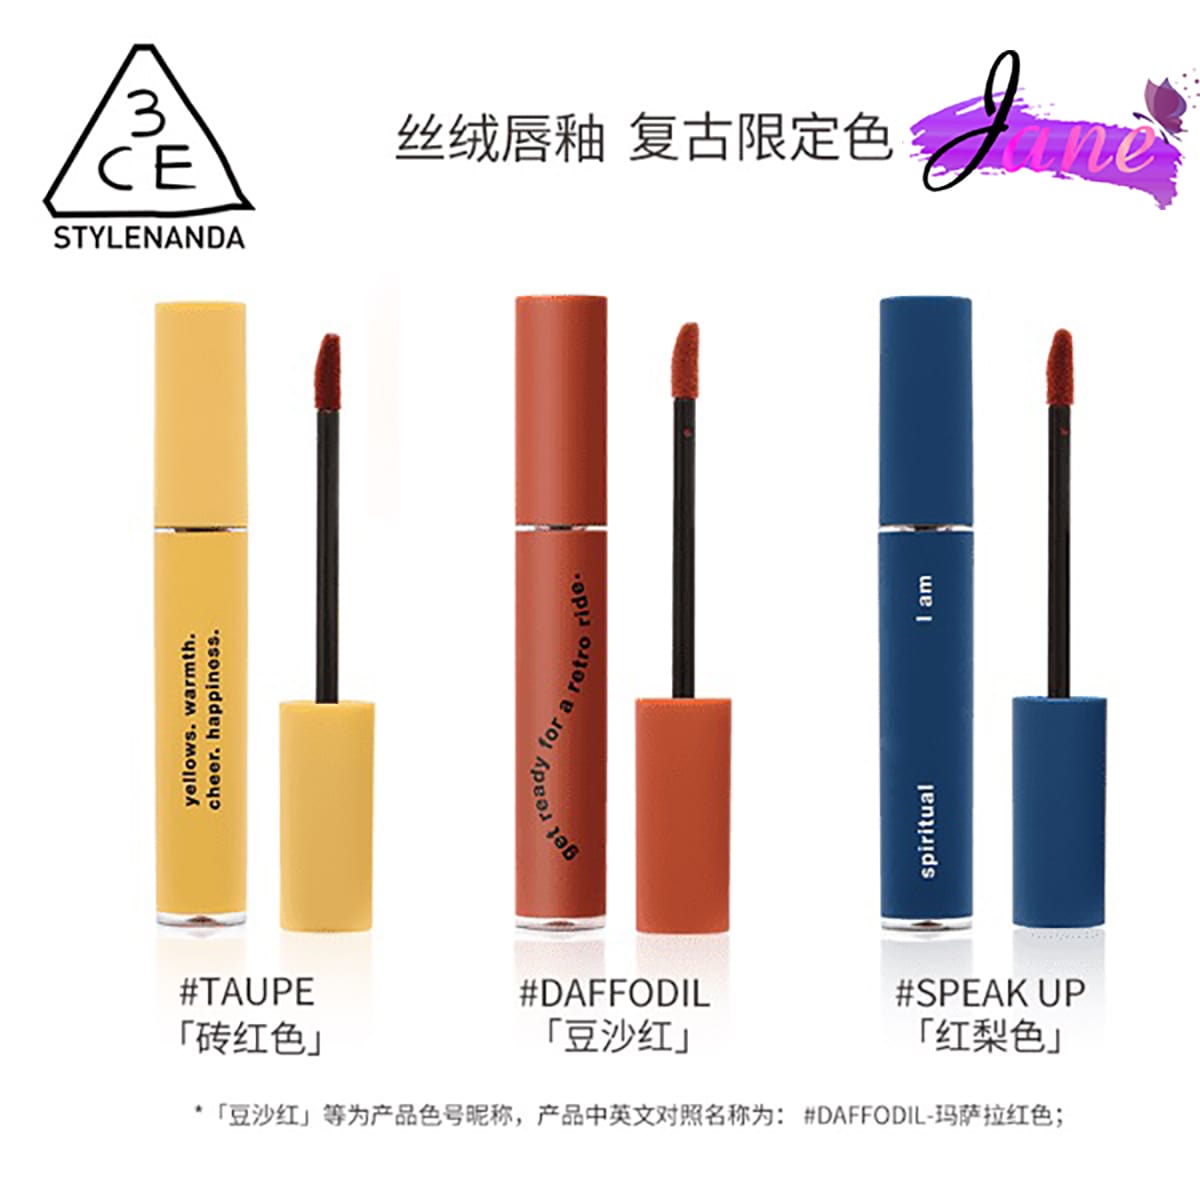 3CE Velvet Lip Tint Retrolism Limited Shades